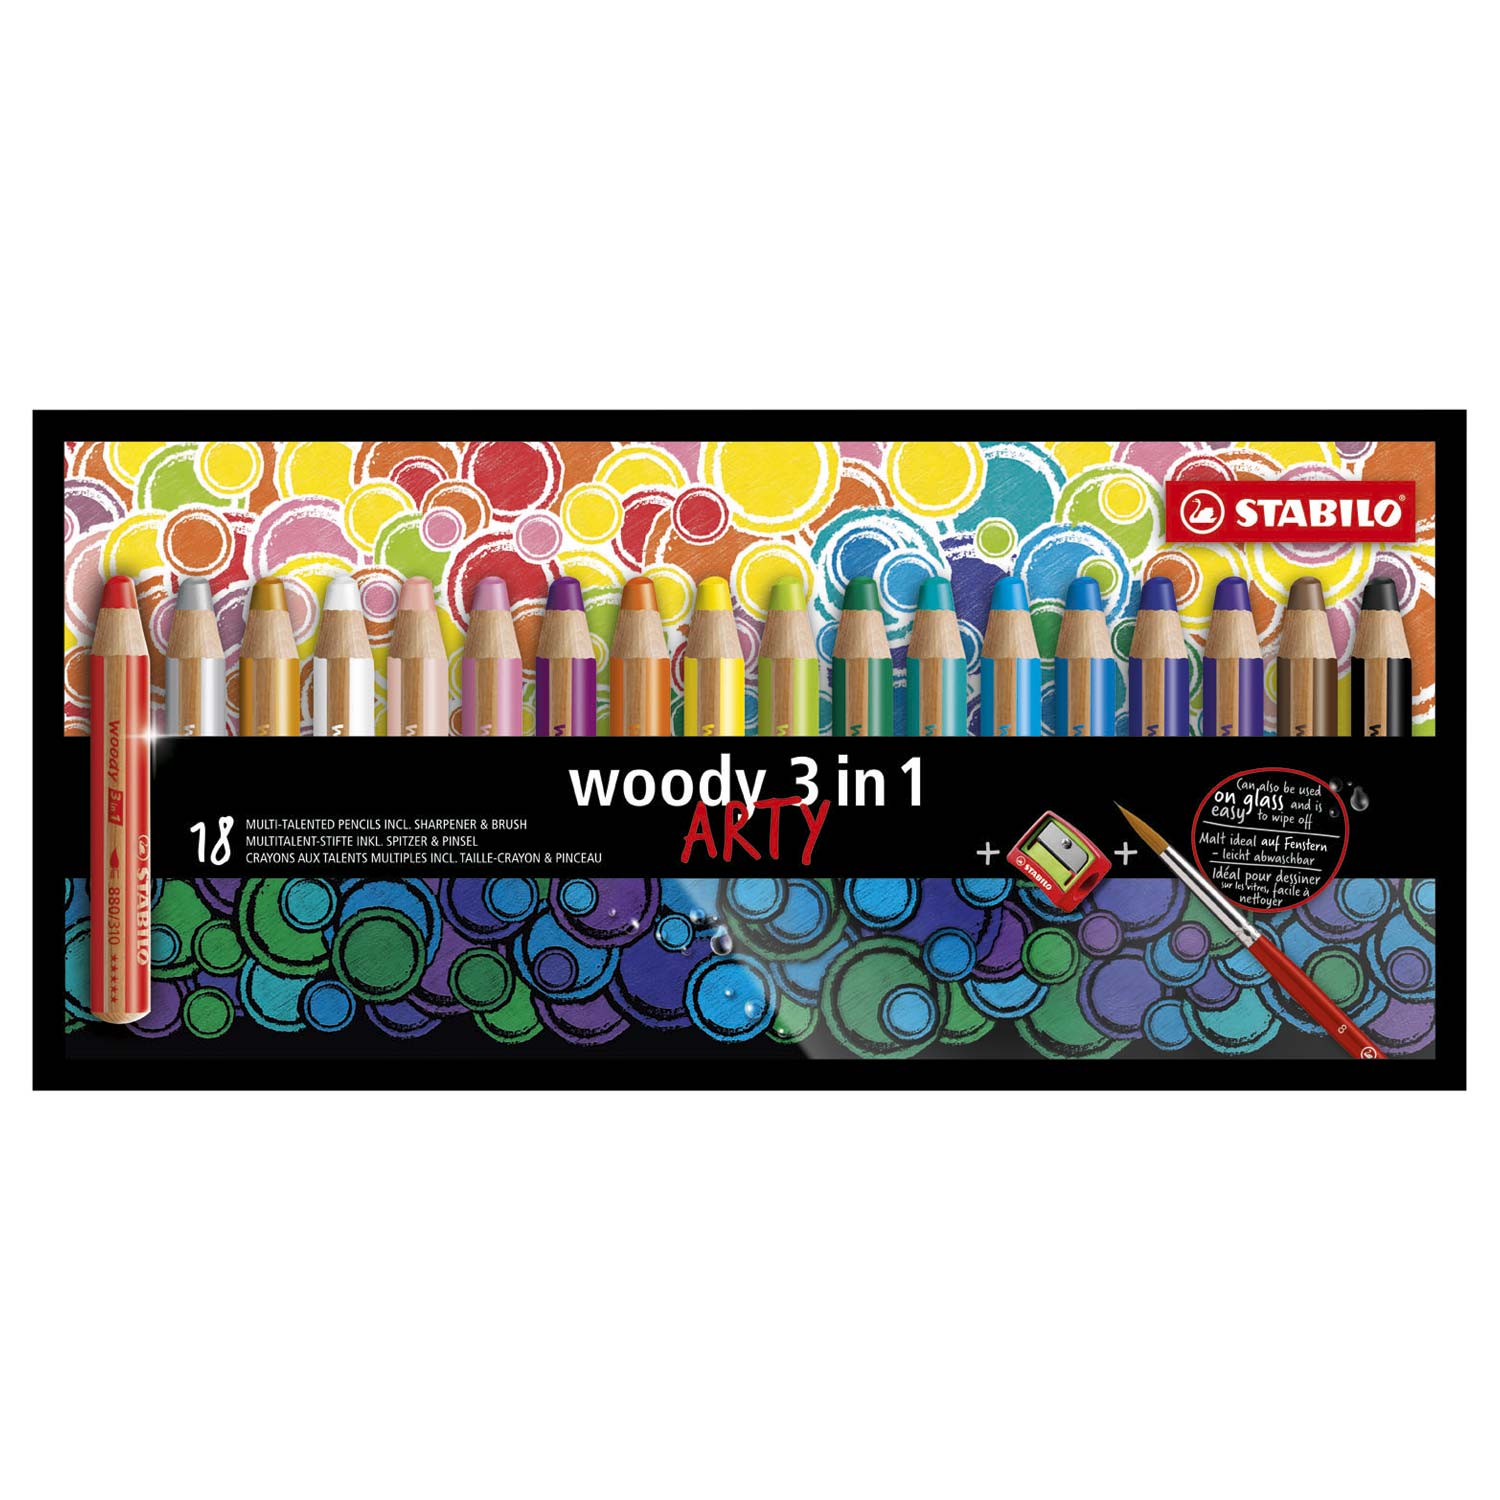 STABILO Woody 3 in 1 – Odd Nodd Art Supply